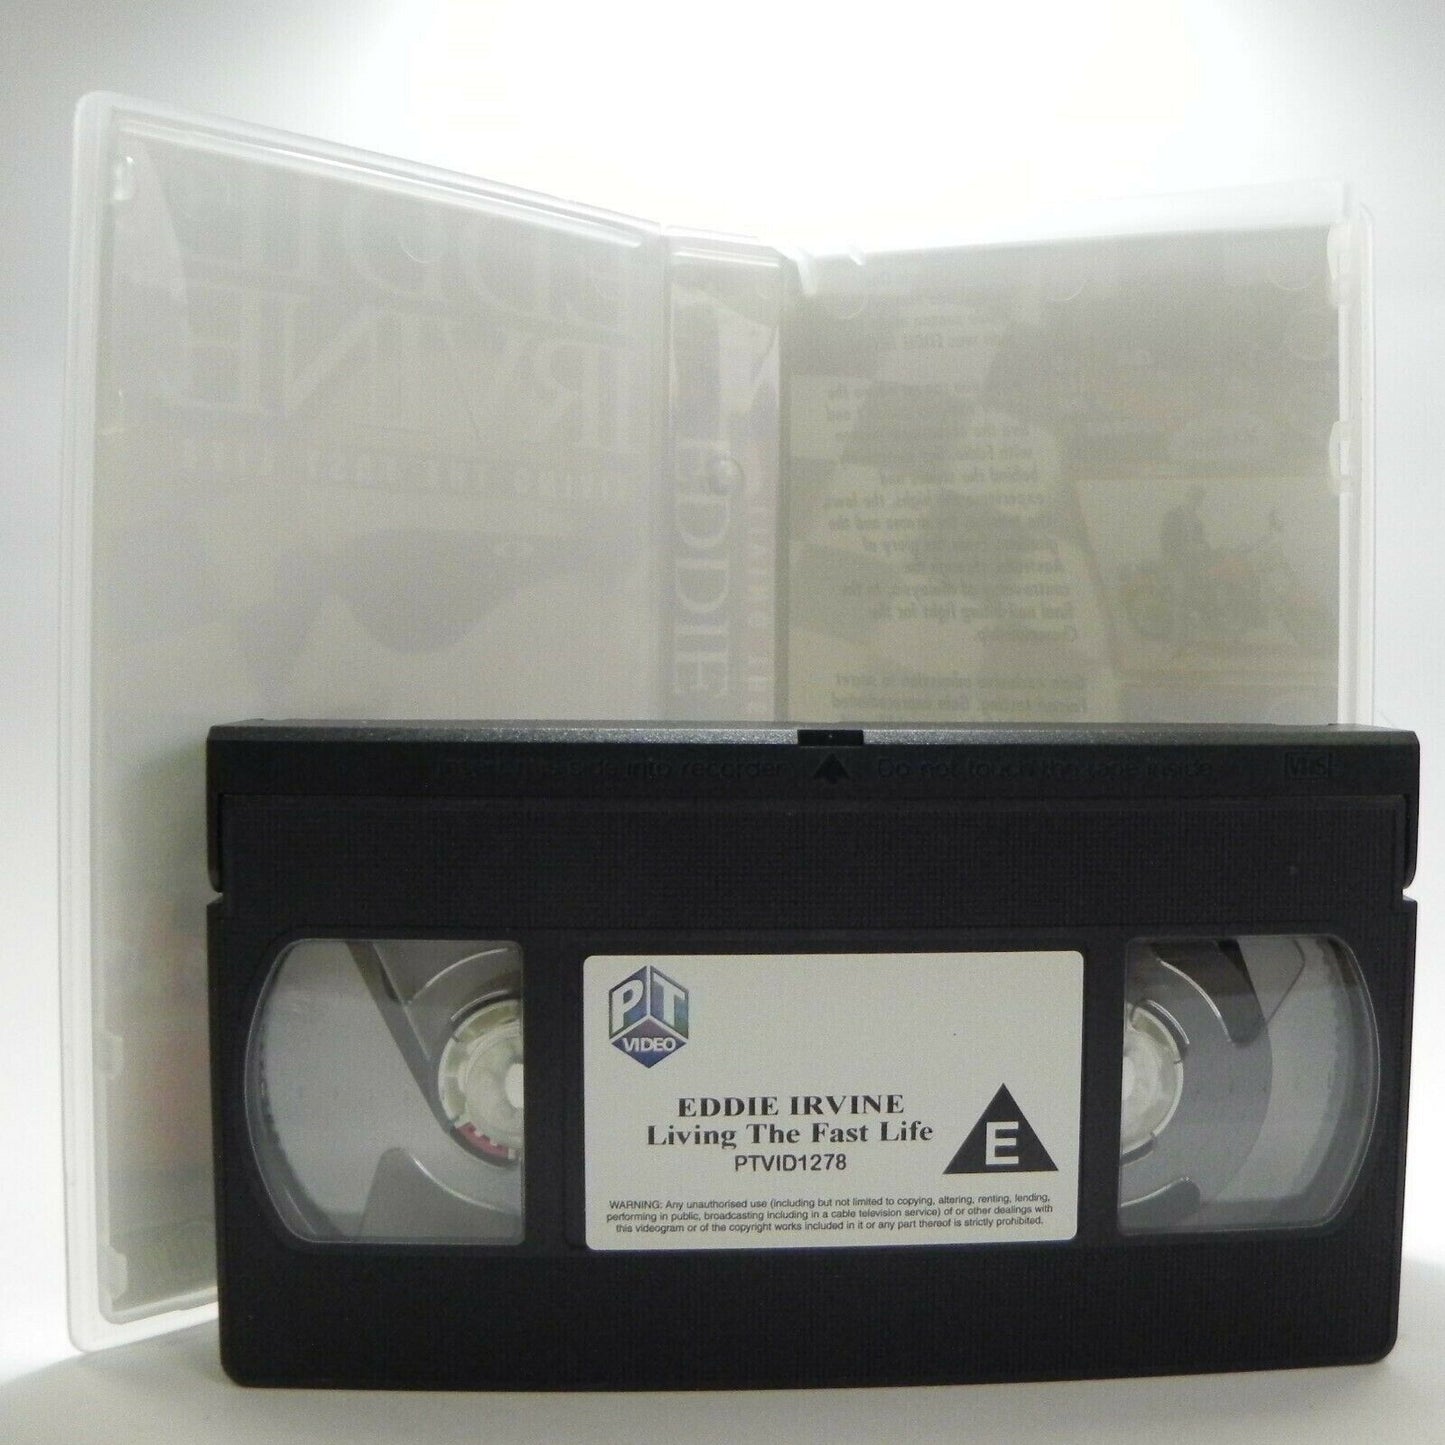 Eddie Irvine: Living The Fast Life - Documentary - Formula 1 - F1 Racing - VHS-